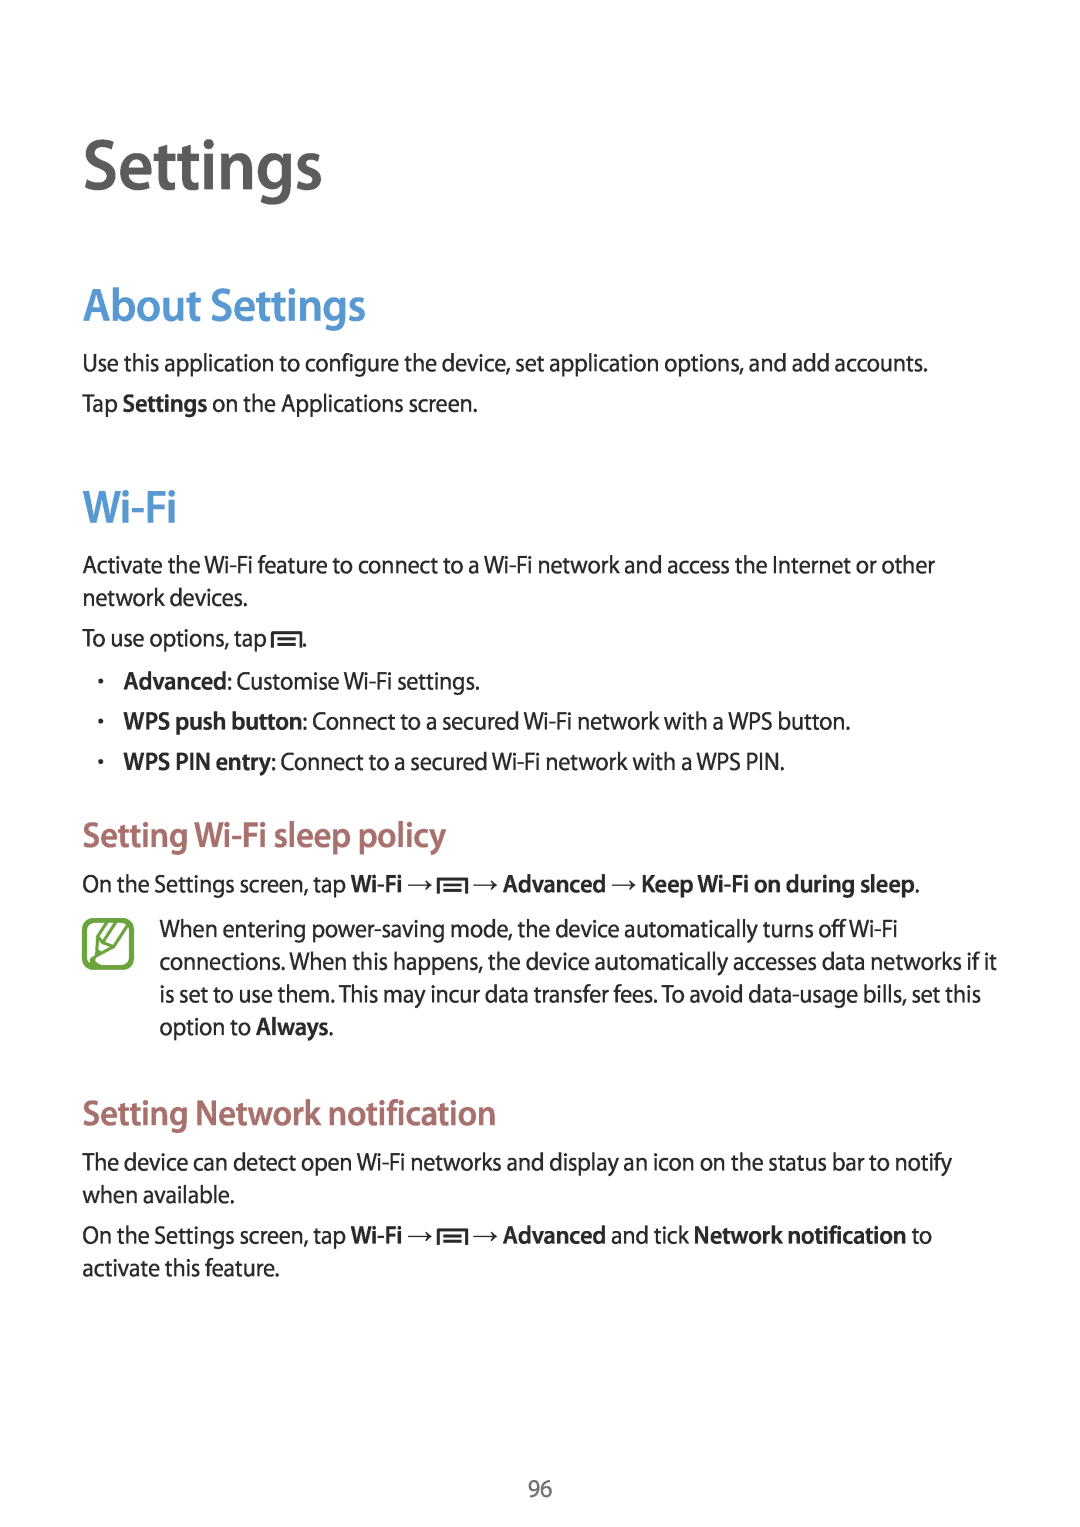 Samsung GT-I8190OKNAUT, GT-I8190RWNDTM About Settings, Setting Wi-Fi sleep policy, Setting Network notification 